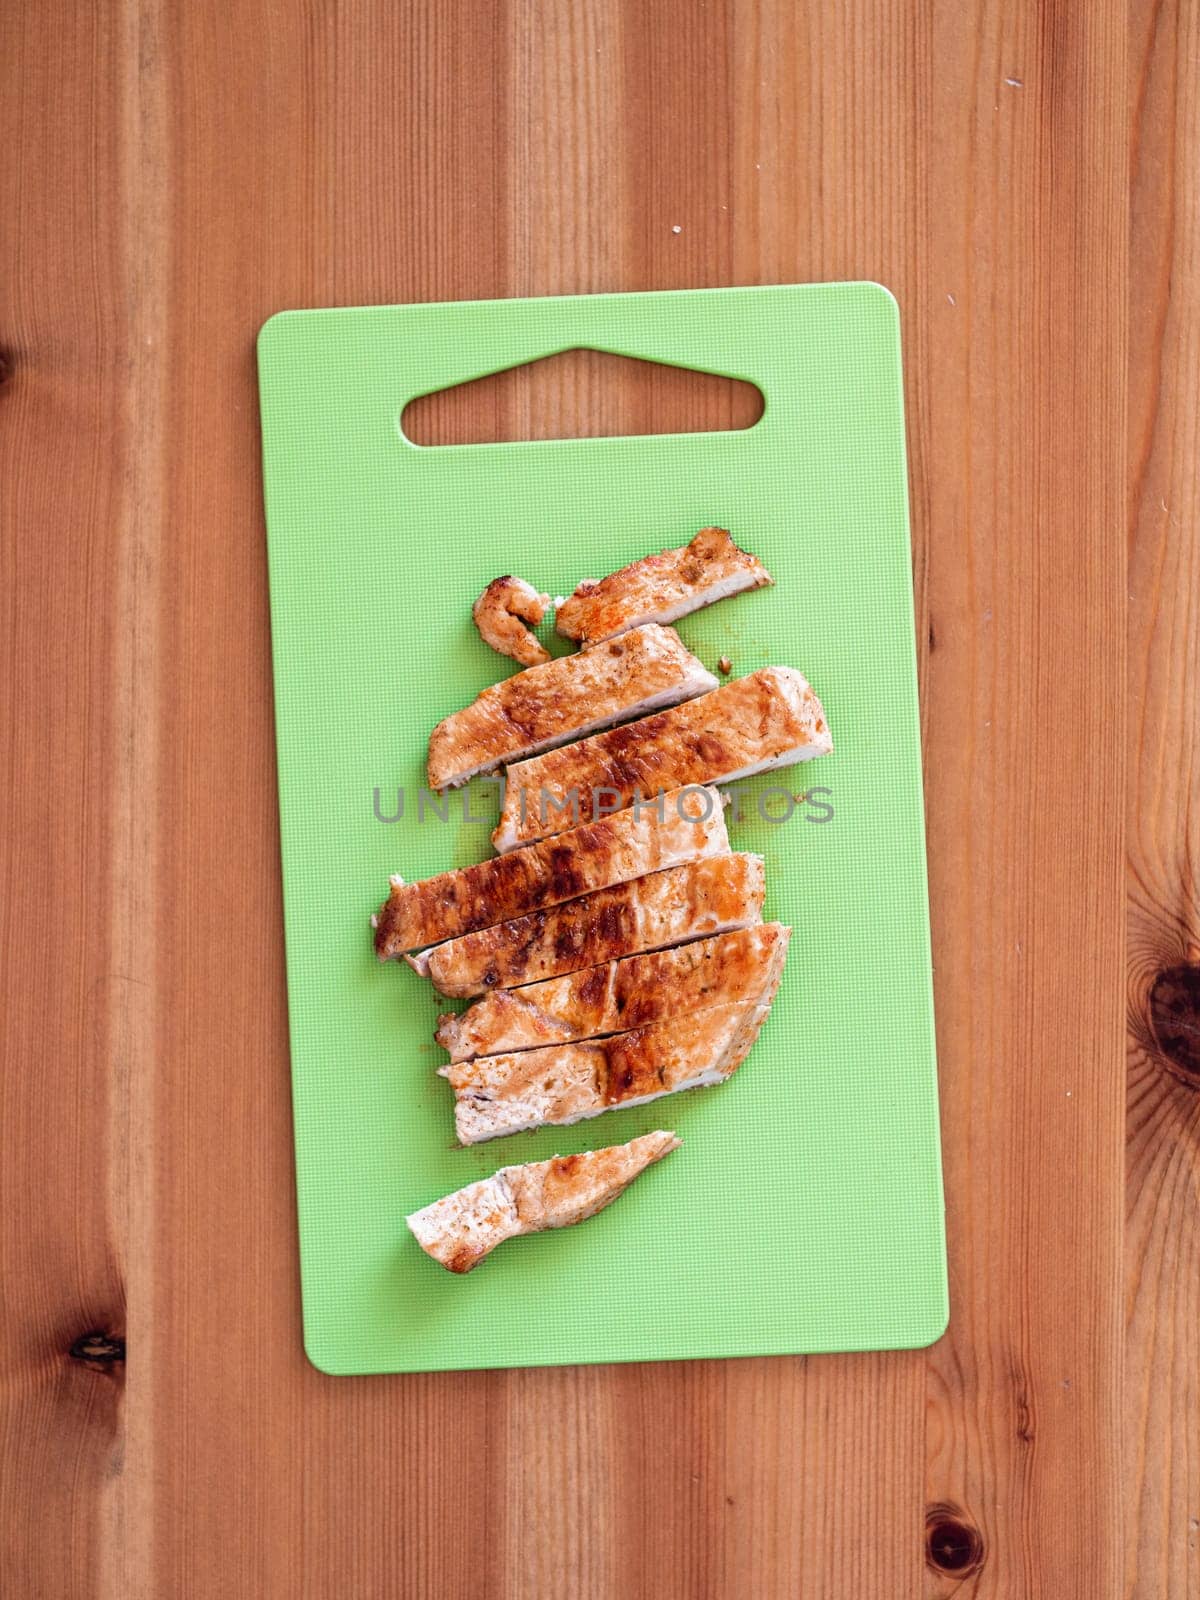 grilled turkey meat steak sliced on cutting board by fascinadora